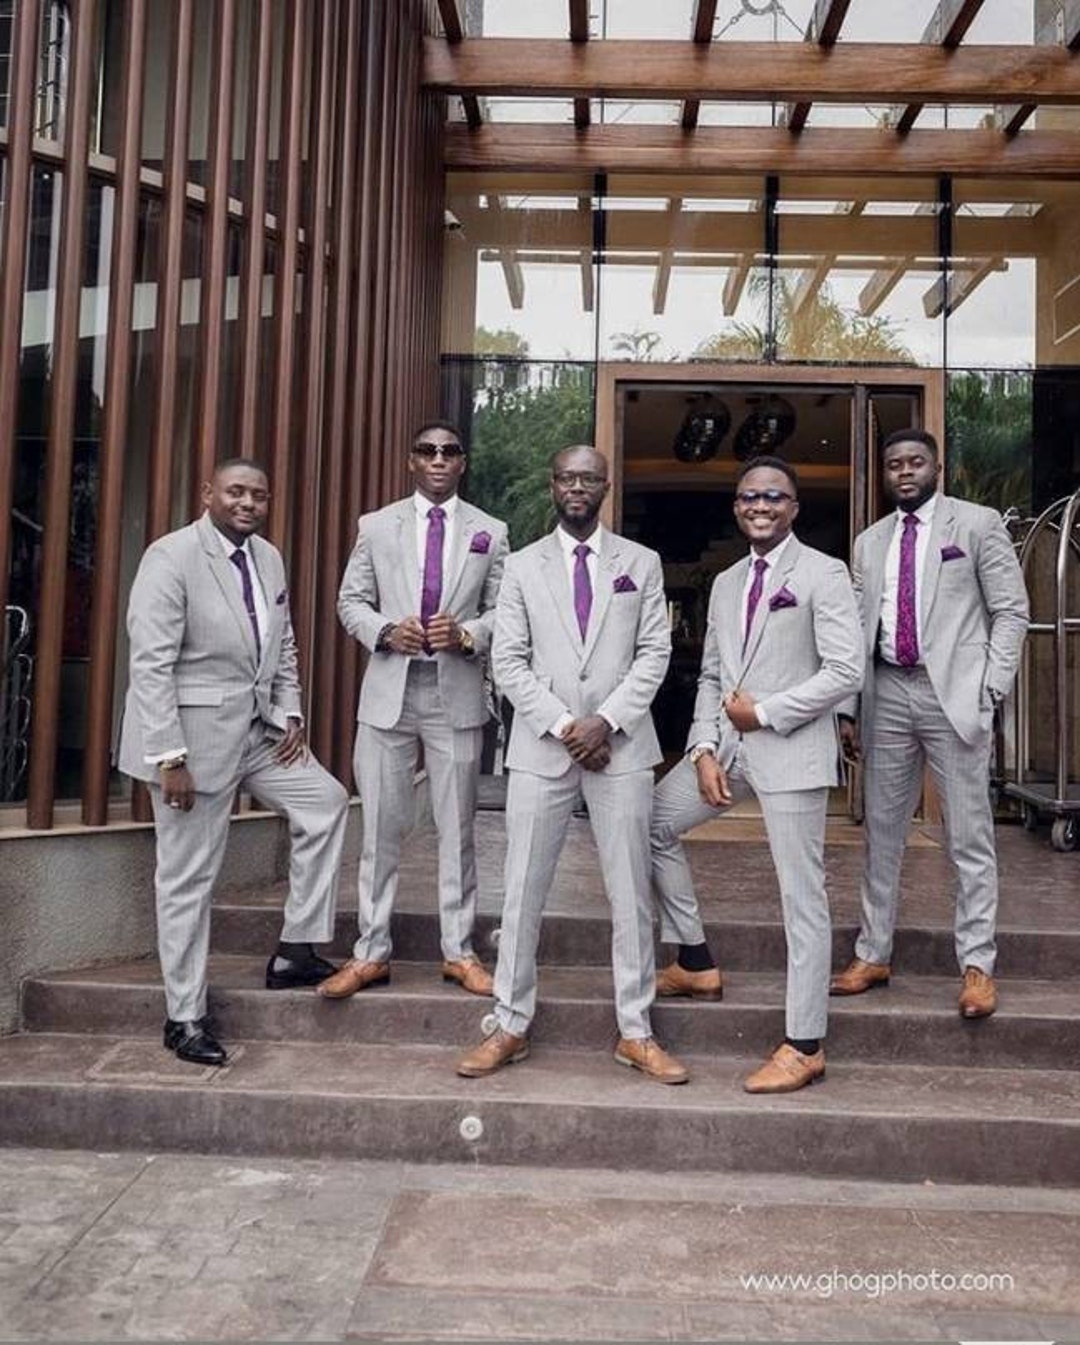 5 Groomsmen Suit Ideas To Match Your Wedding Colors | SARTORO